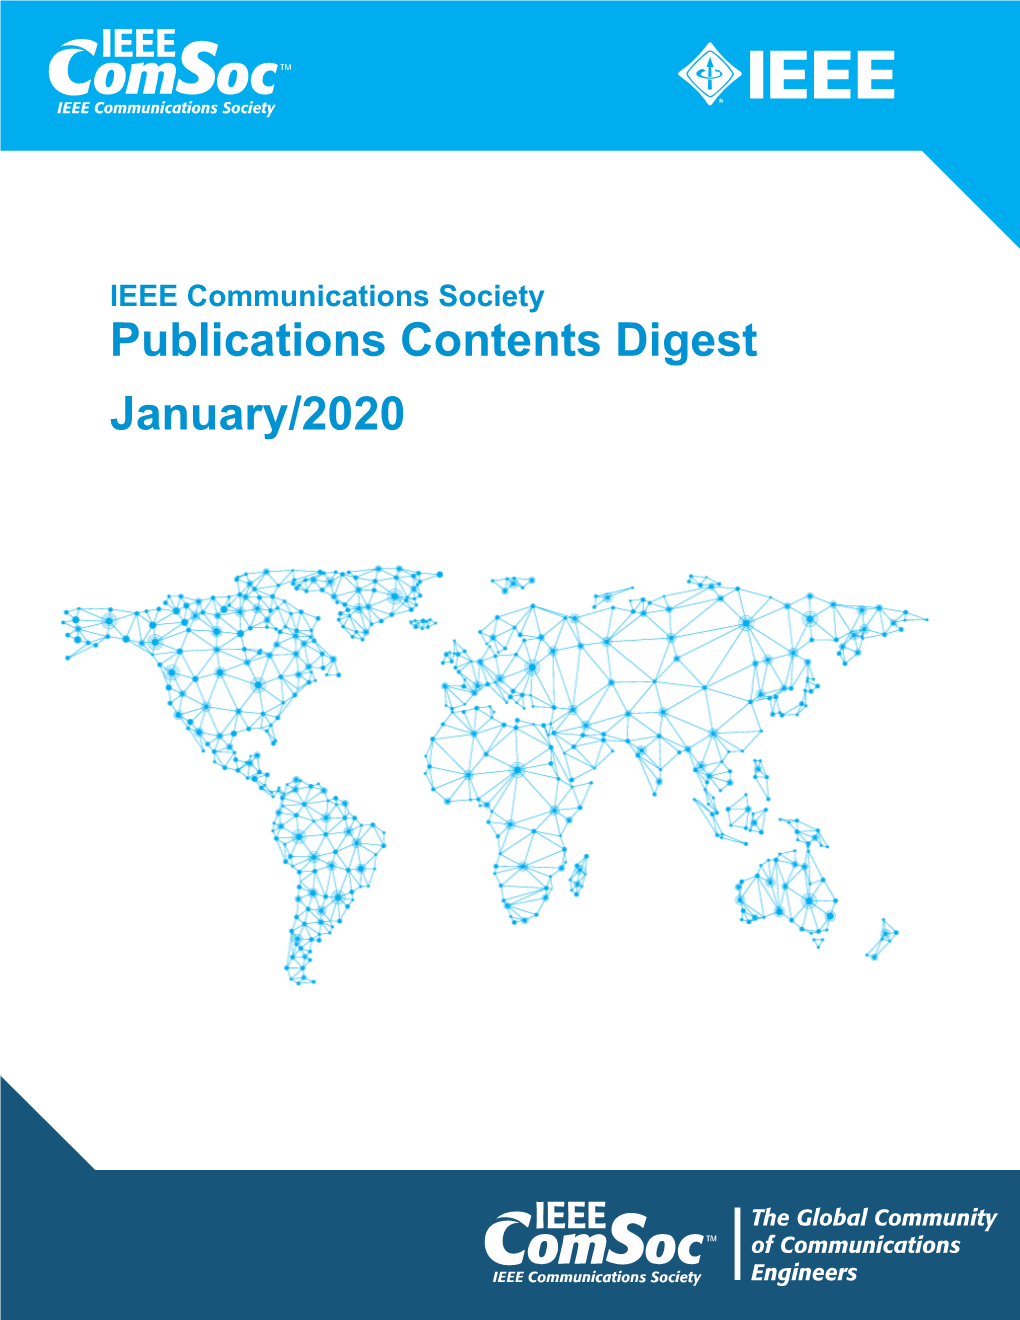 Publications Contents Digest January/2020